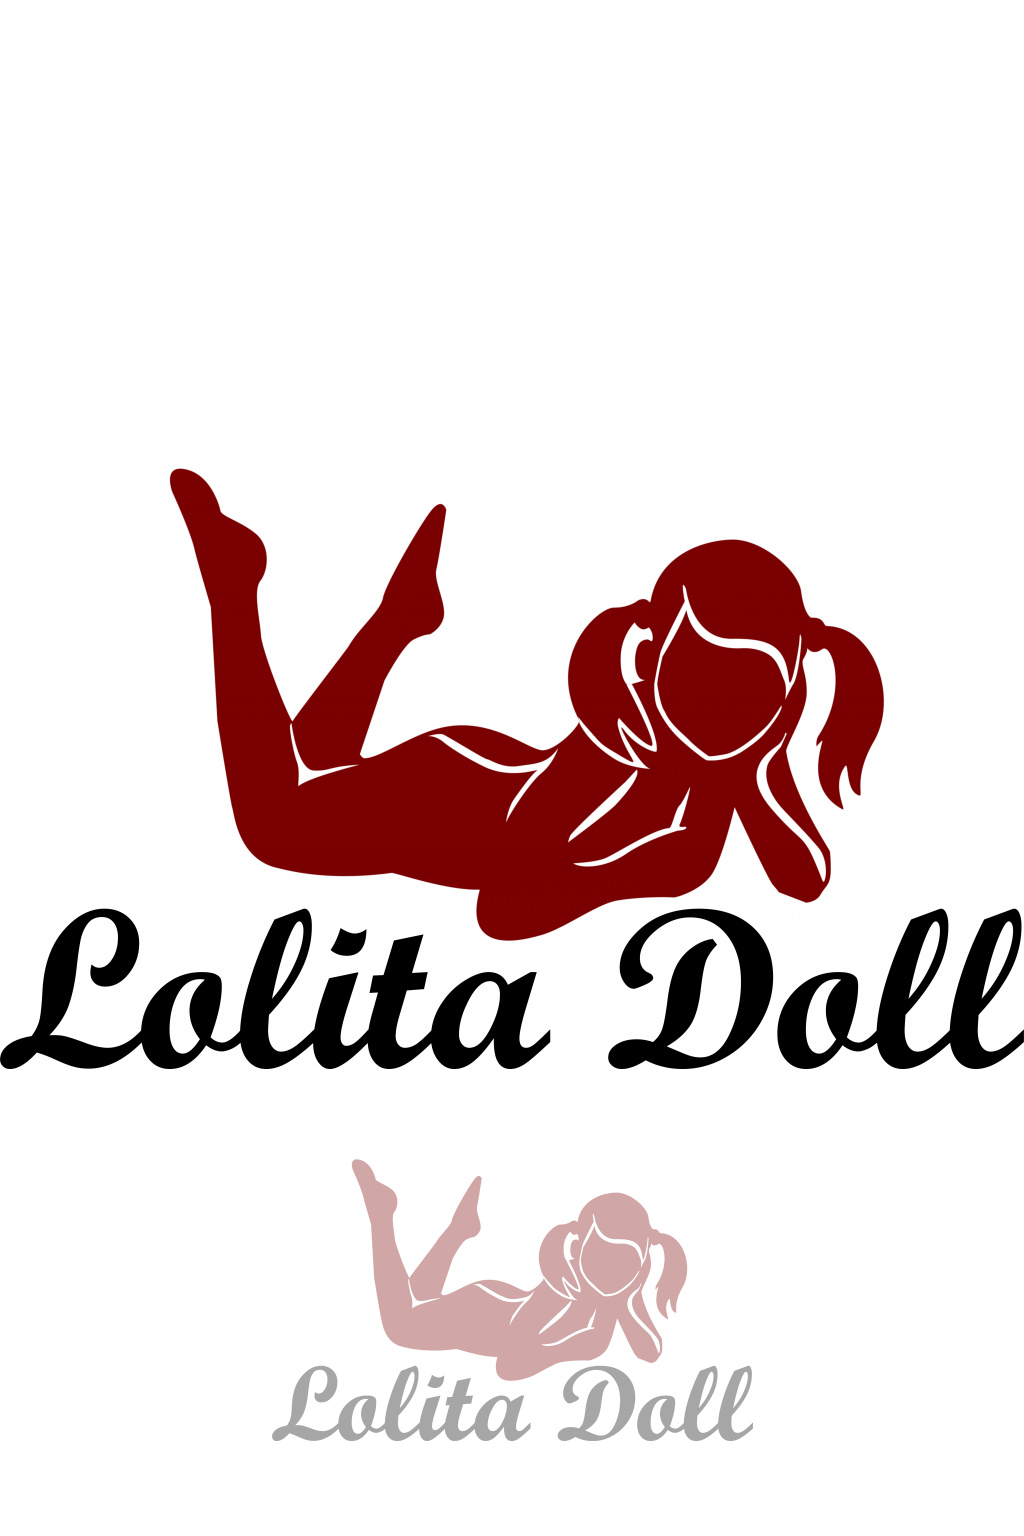 lolita doll logo